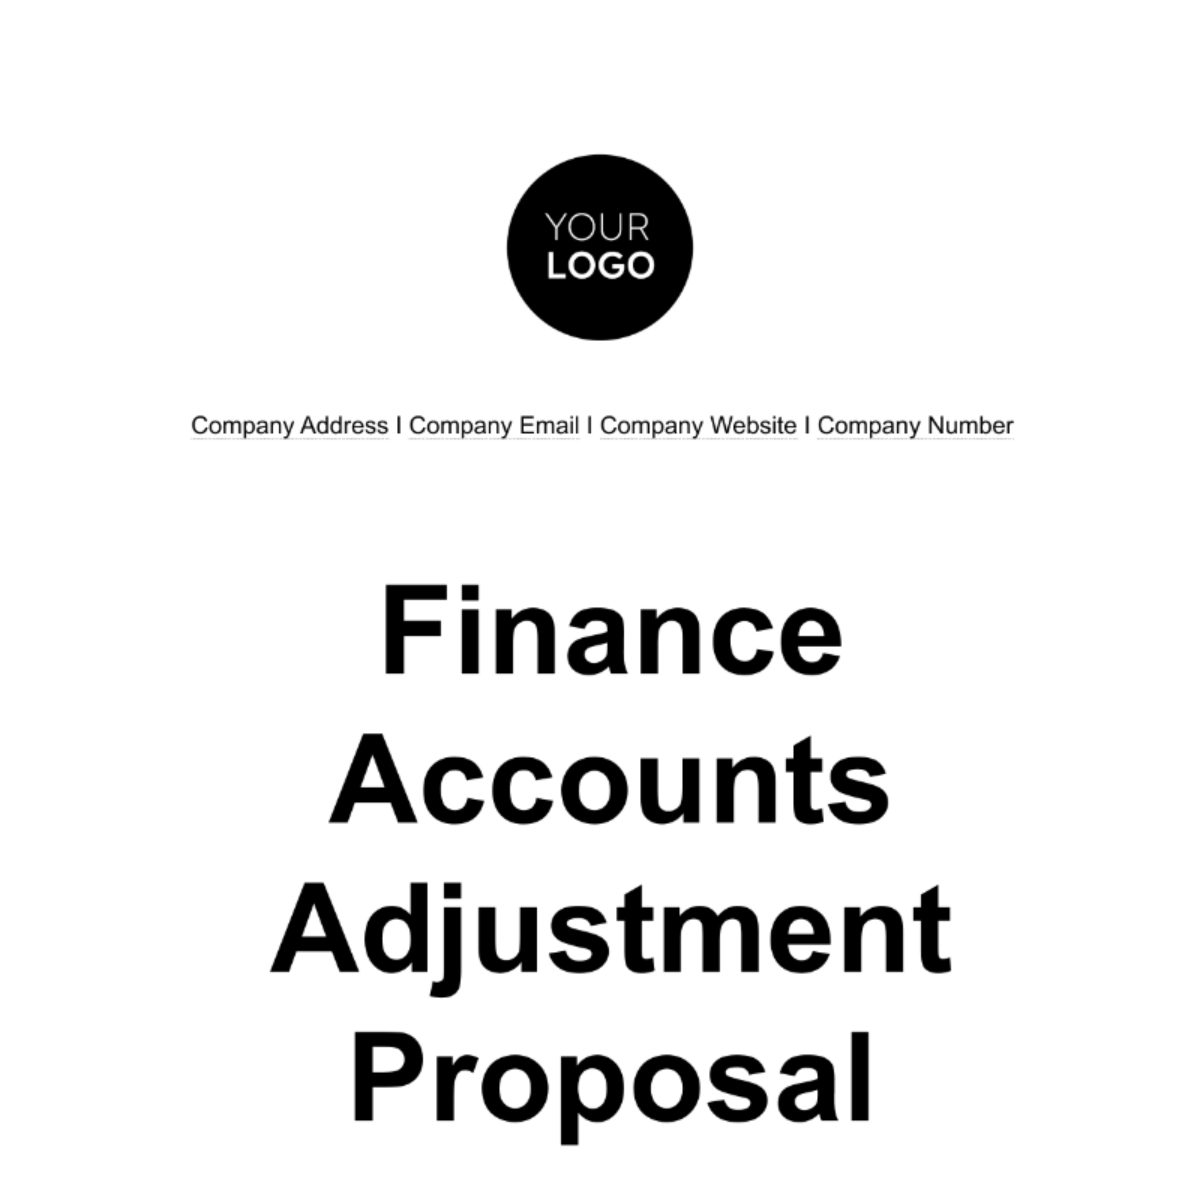 Free Finance Accounts Adjustment Proposal Template